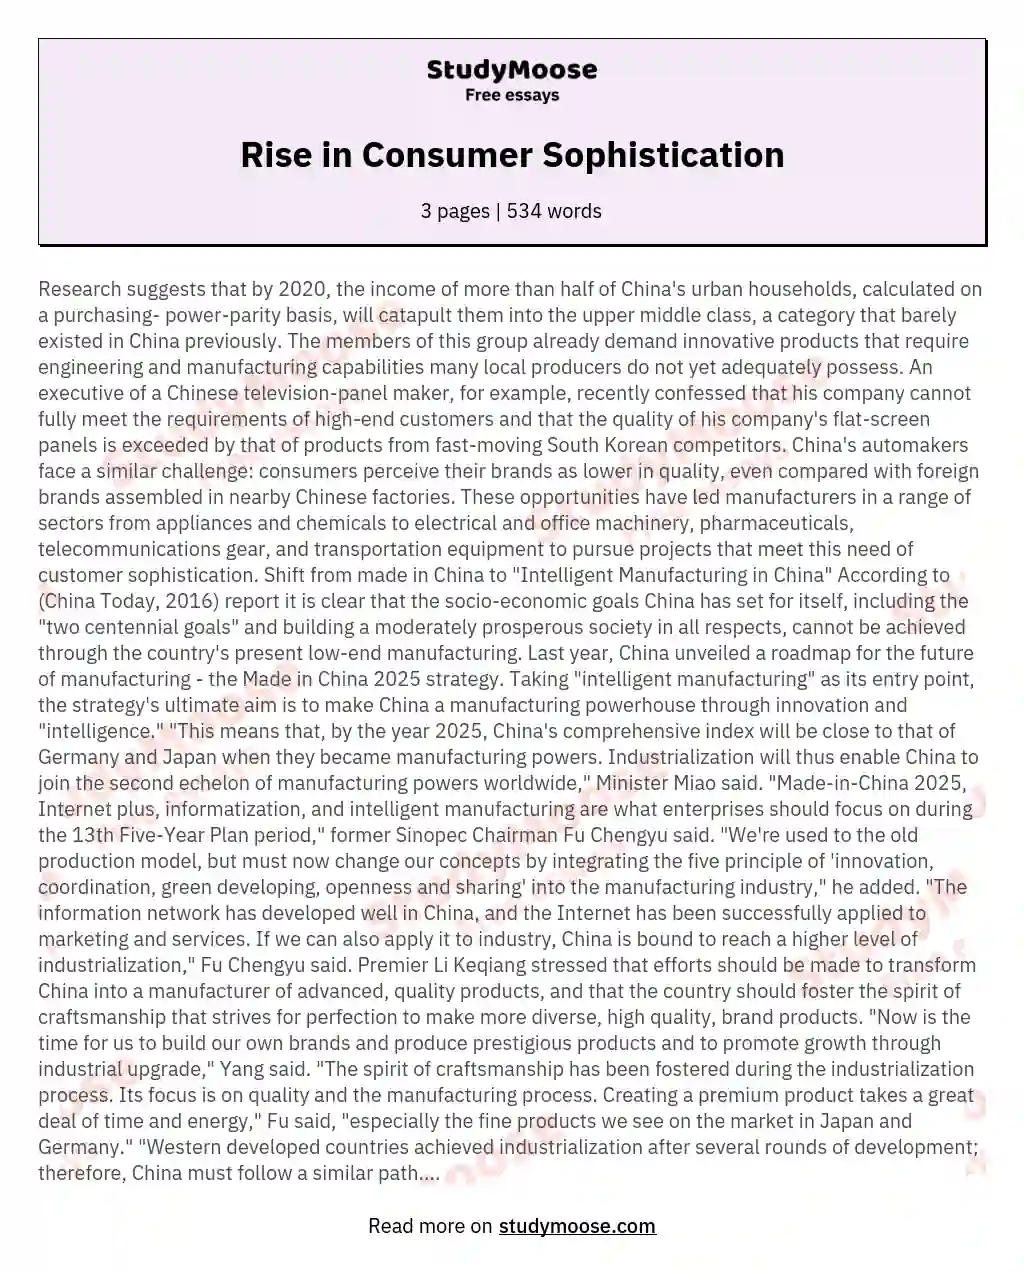 Rise in Consumer Sophistication essay